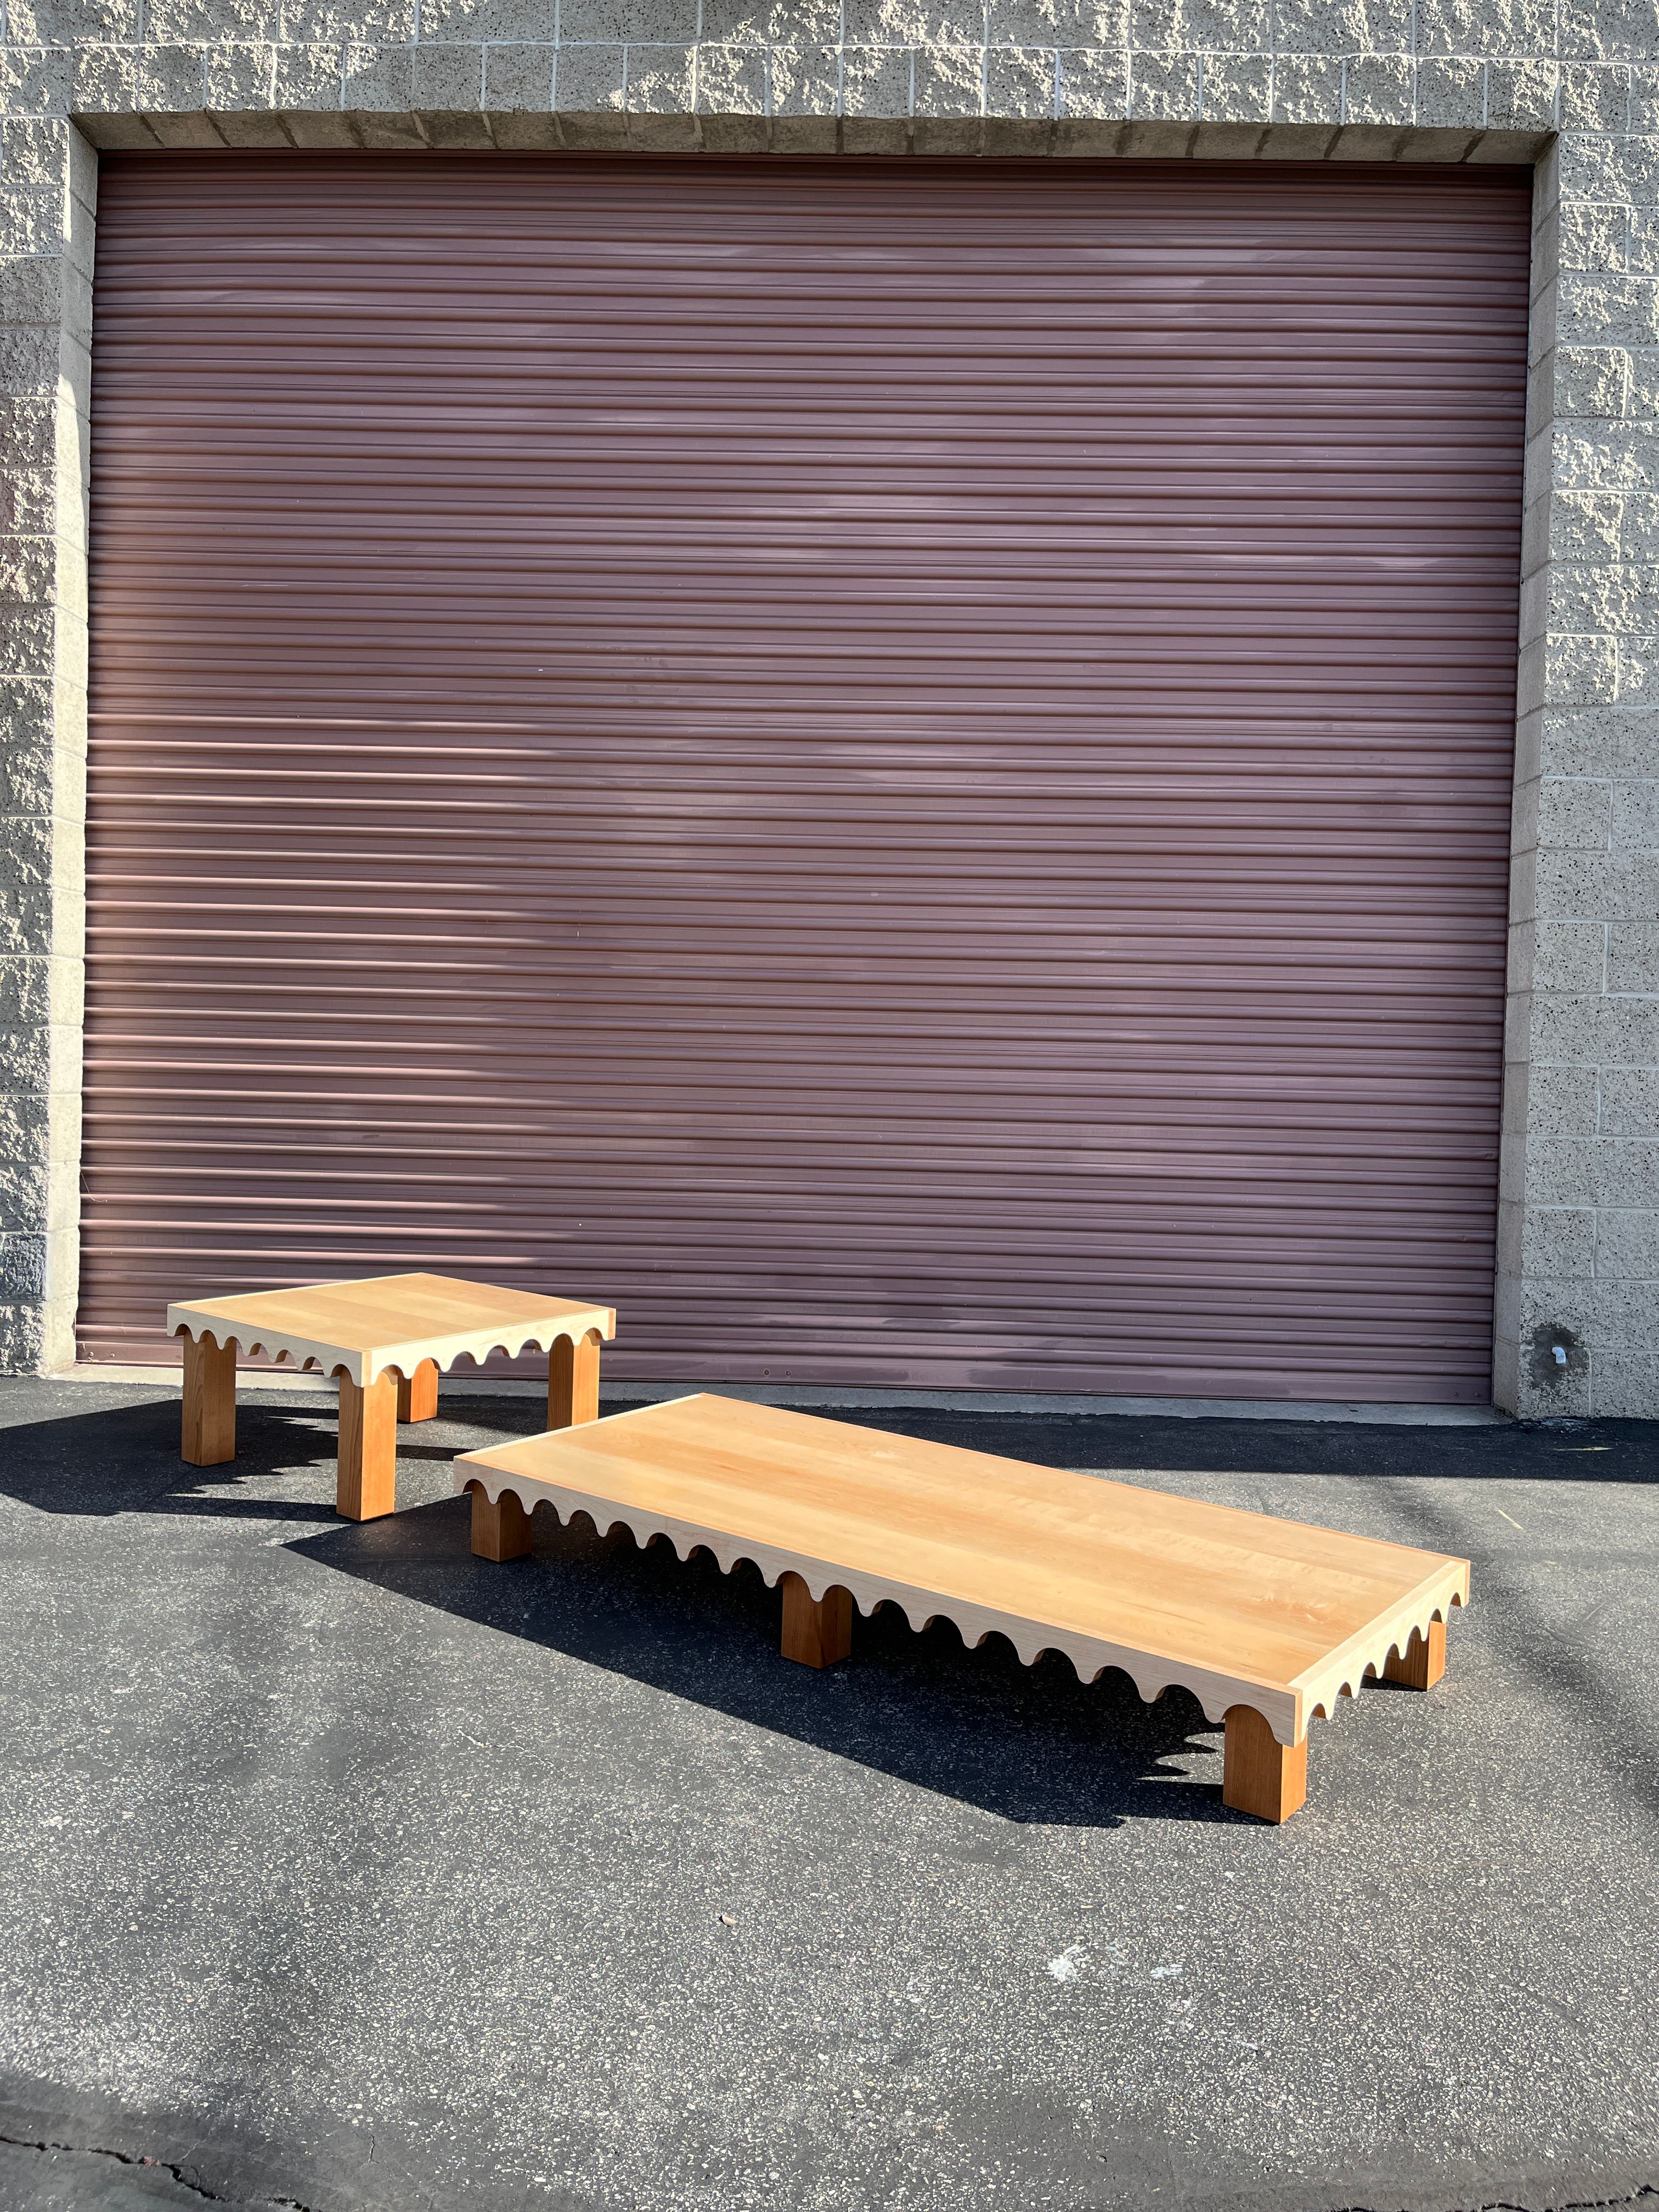  Scallop Benches - Laun Studio product image 8